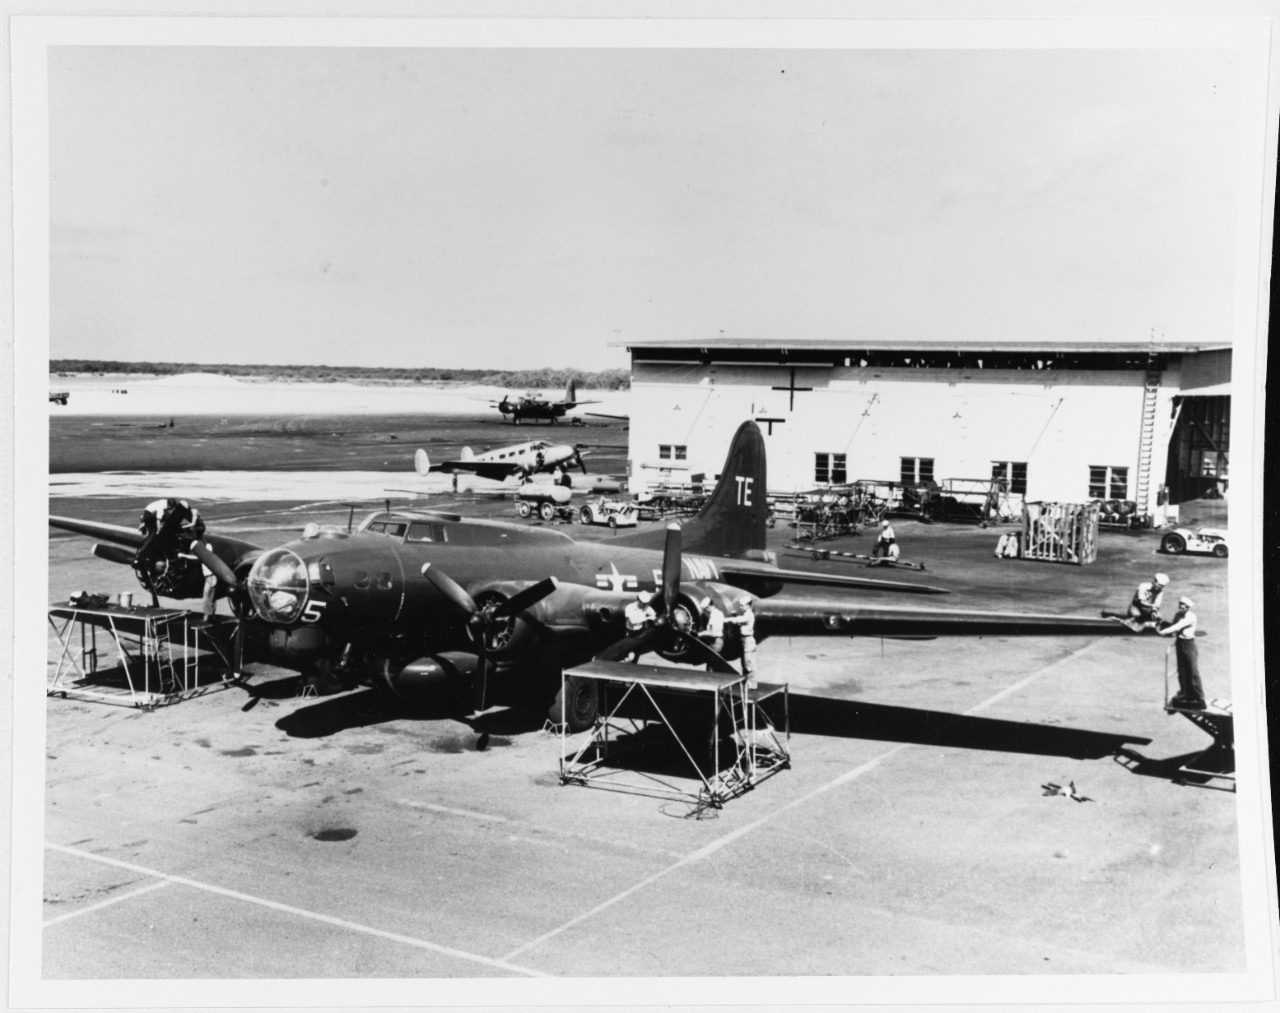 PB-1W "Flying Fortress" 